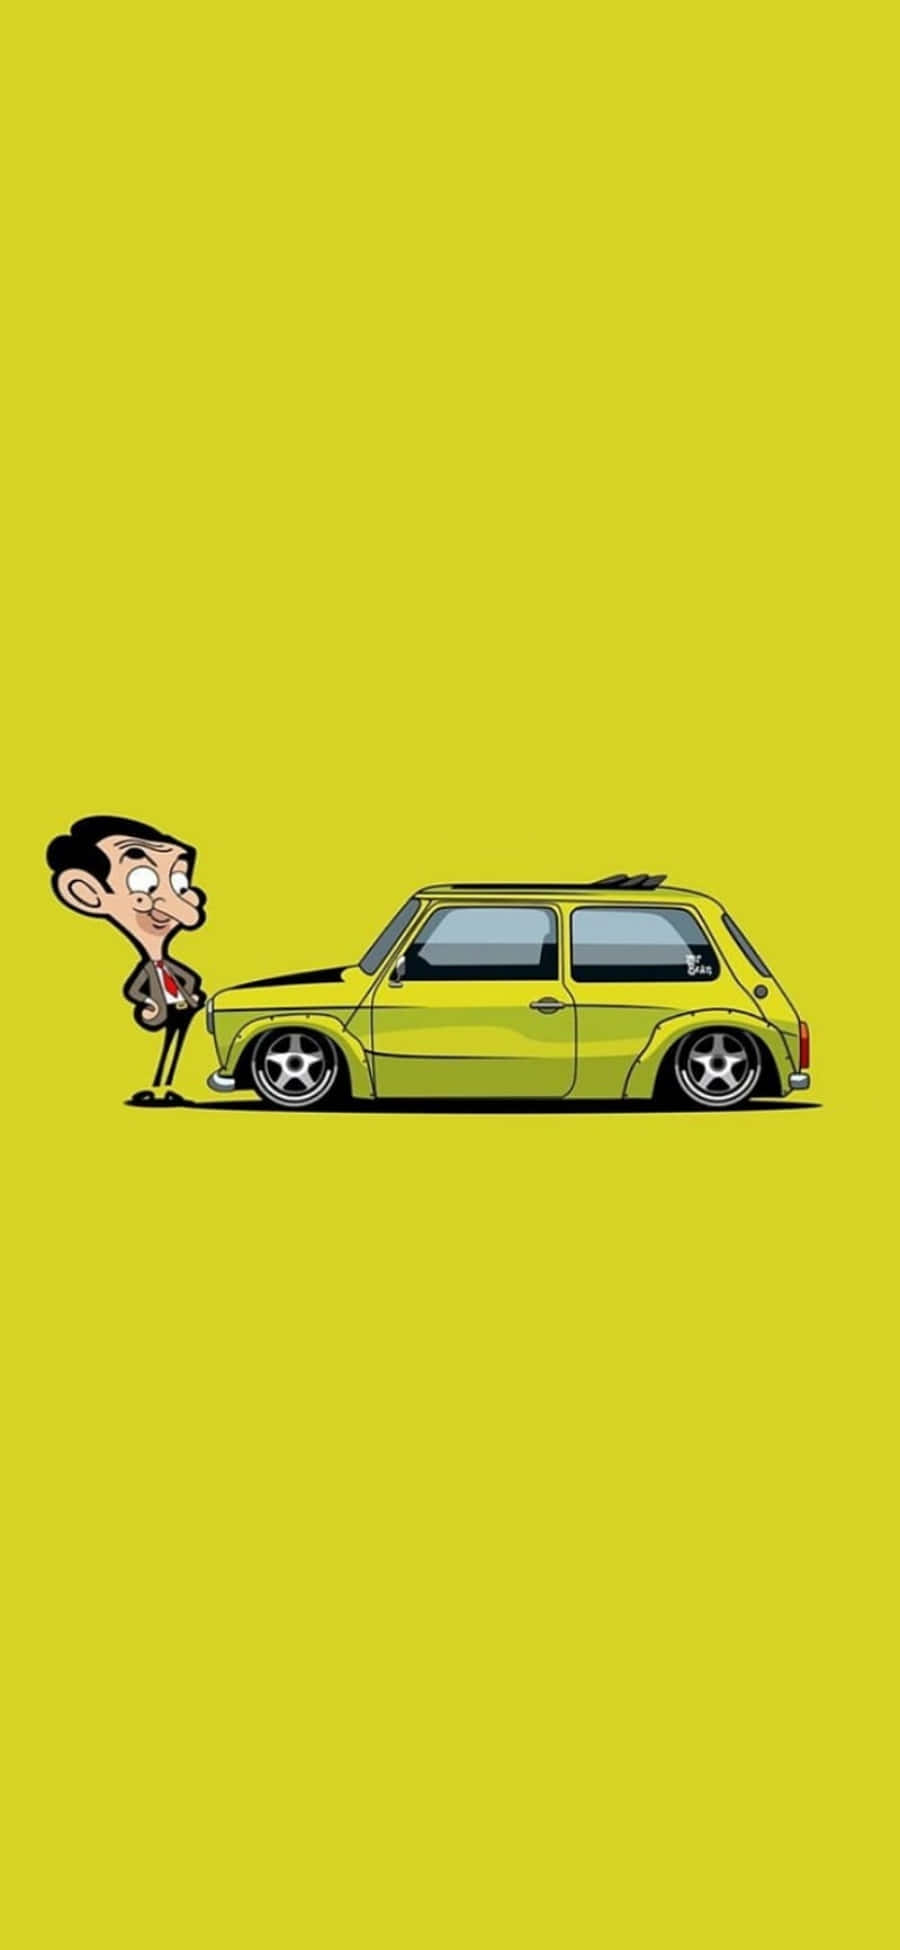 Mr Bean's Funny Adventure